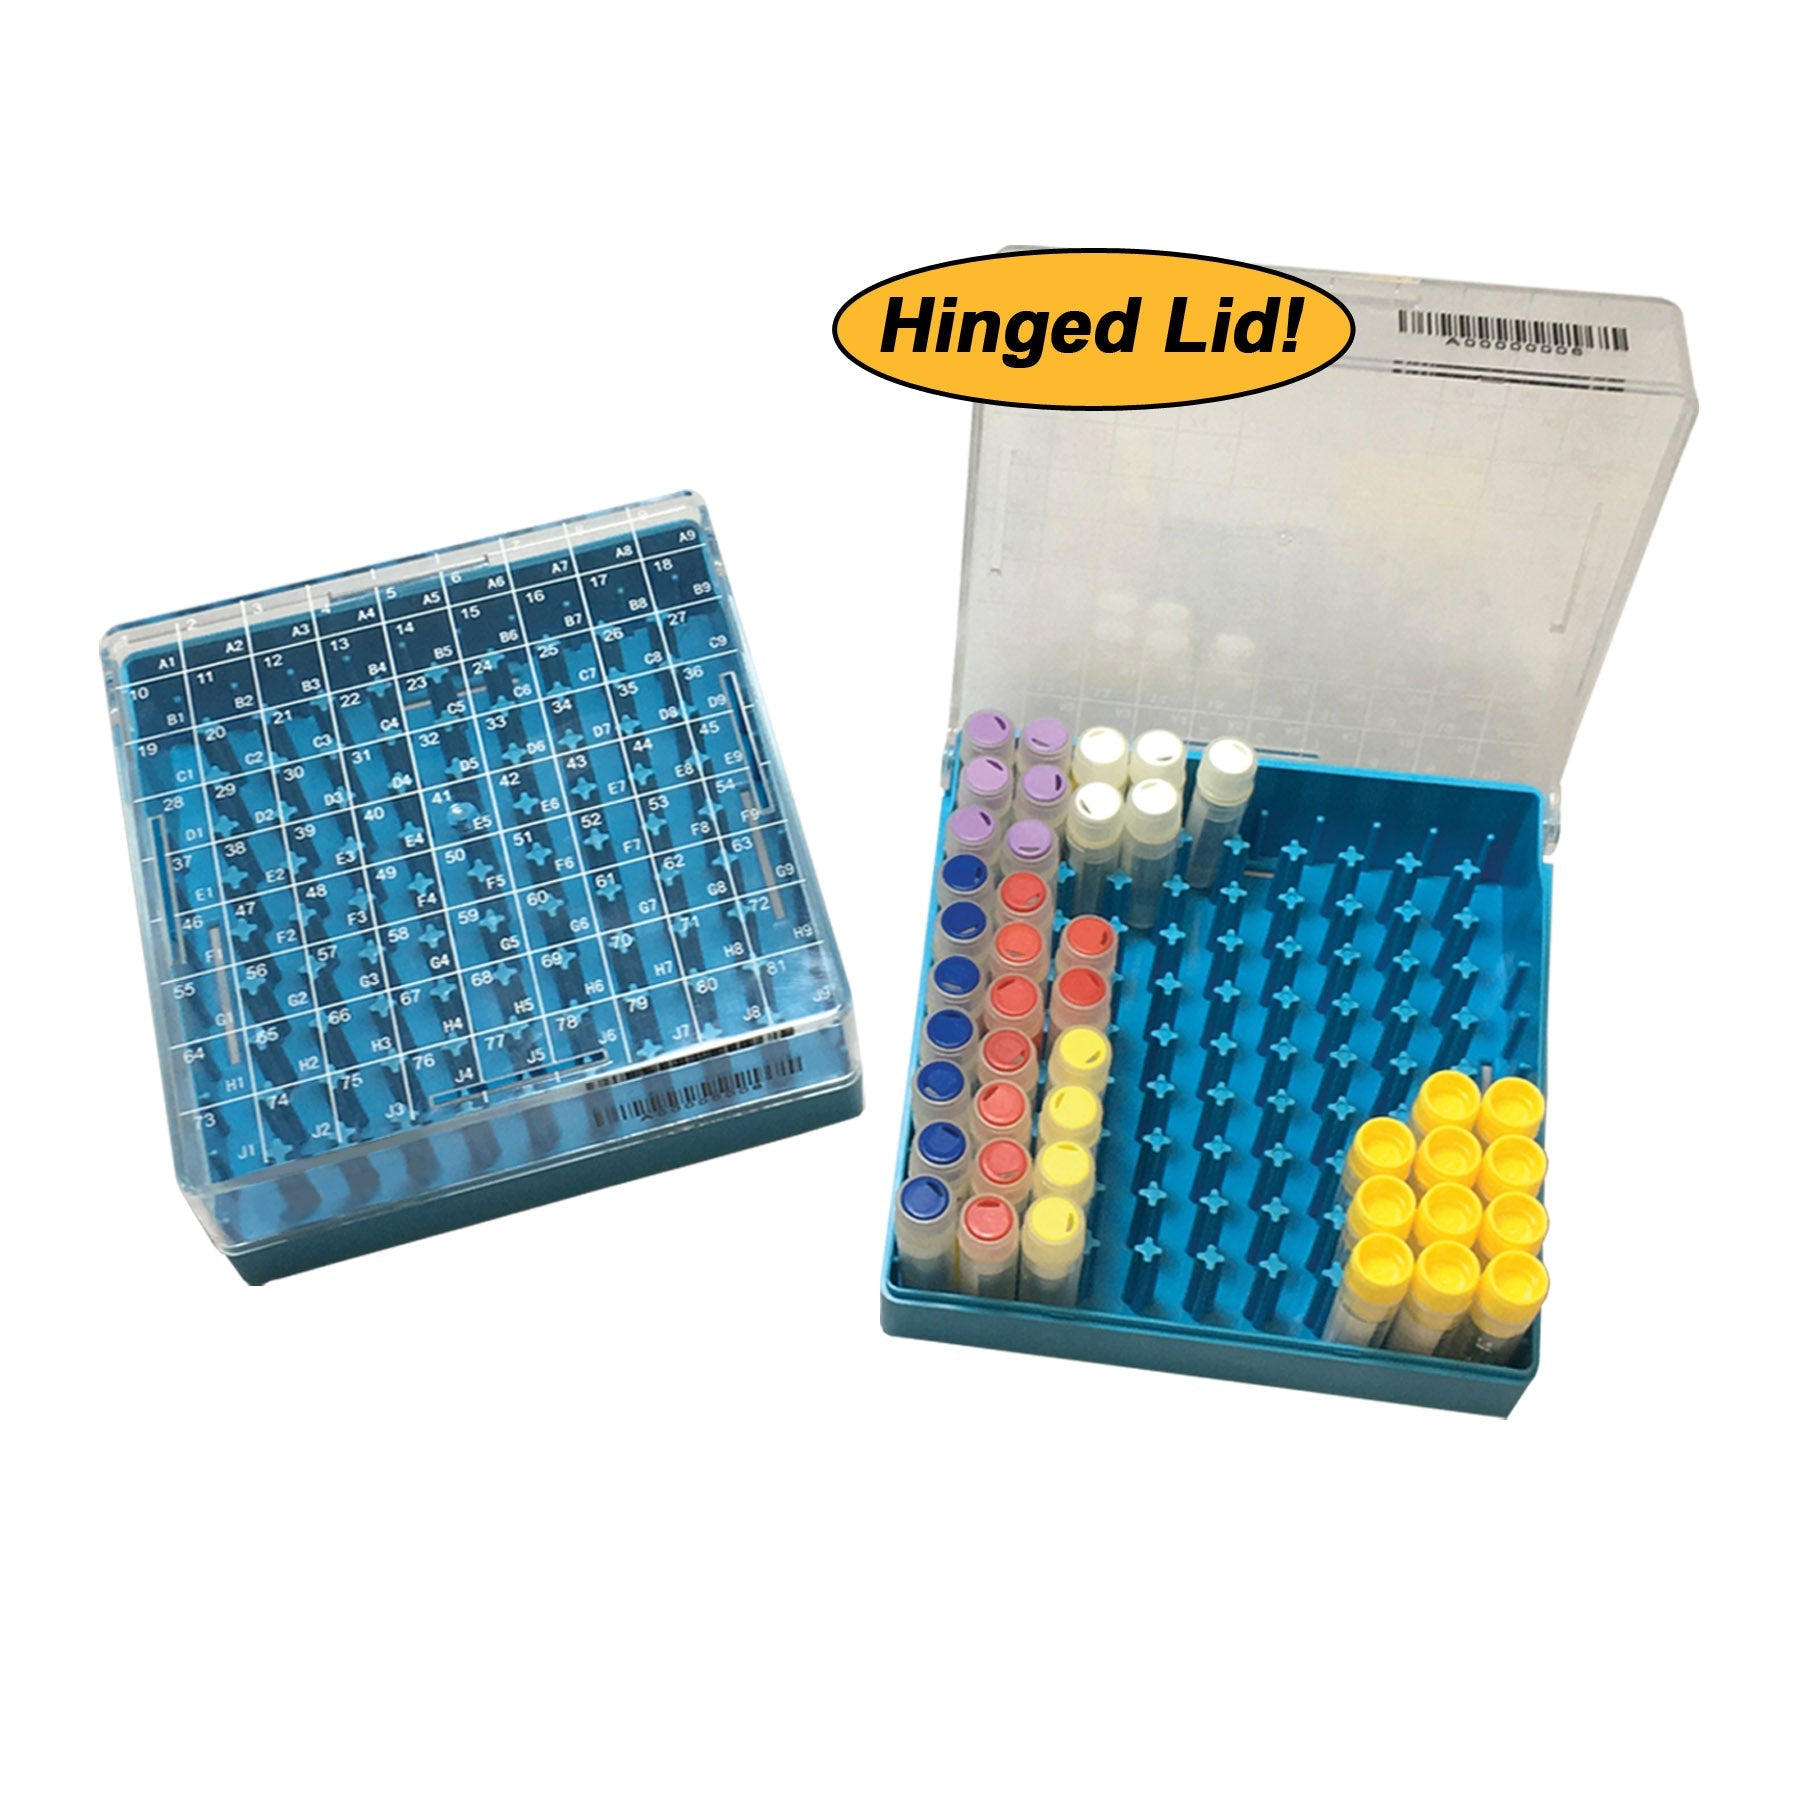 MTC Bio R2081, Cryo Storage Box, 81 Place (9 x 9), Polycarbonate, with Hinged Lid, 5/pk